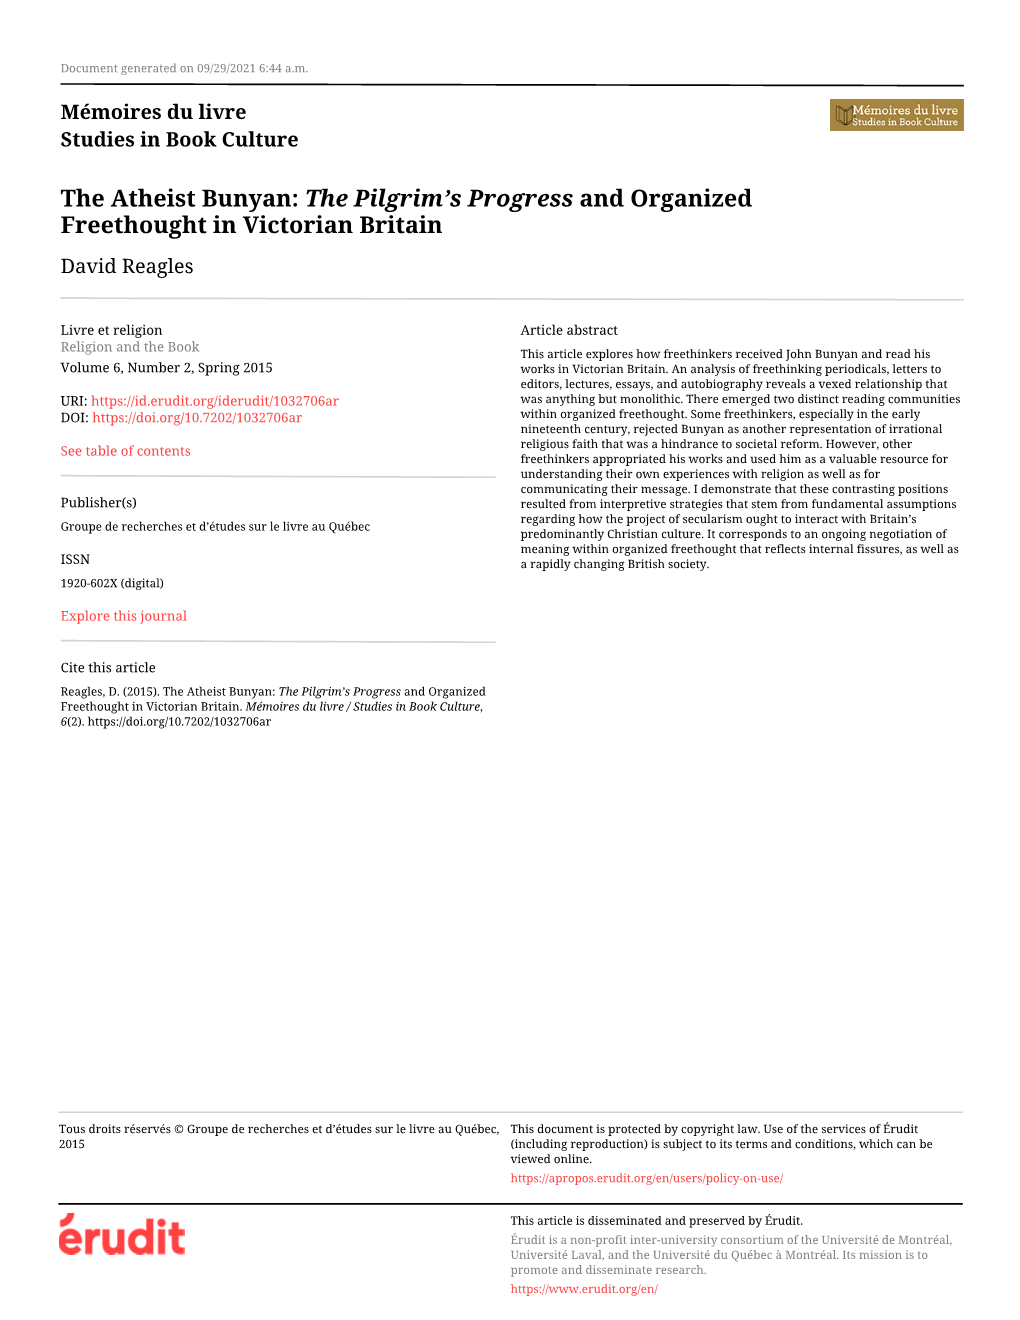 The Atheist Bunyan: the Pilgrim's Progress and Organized